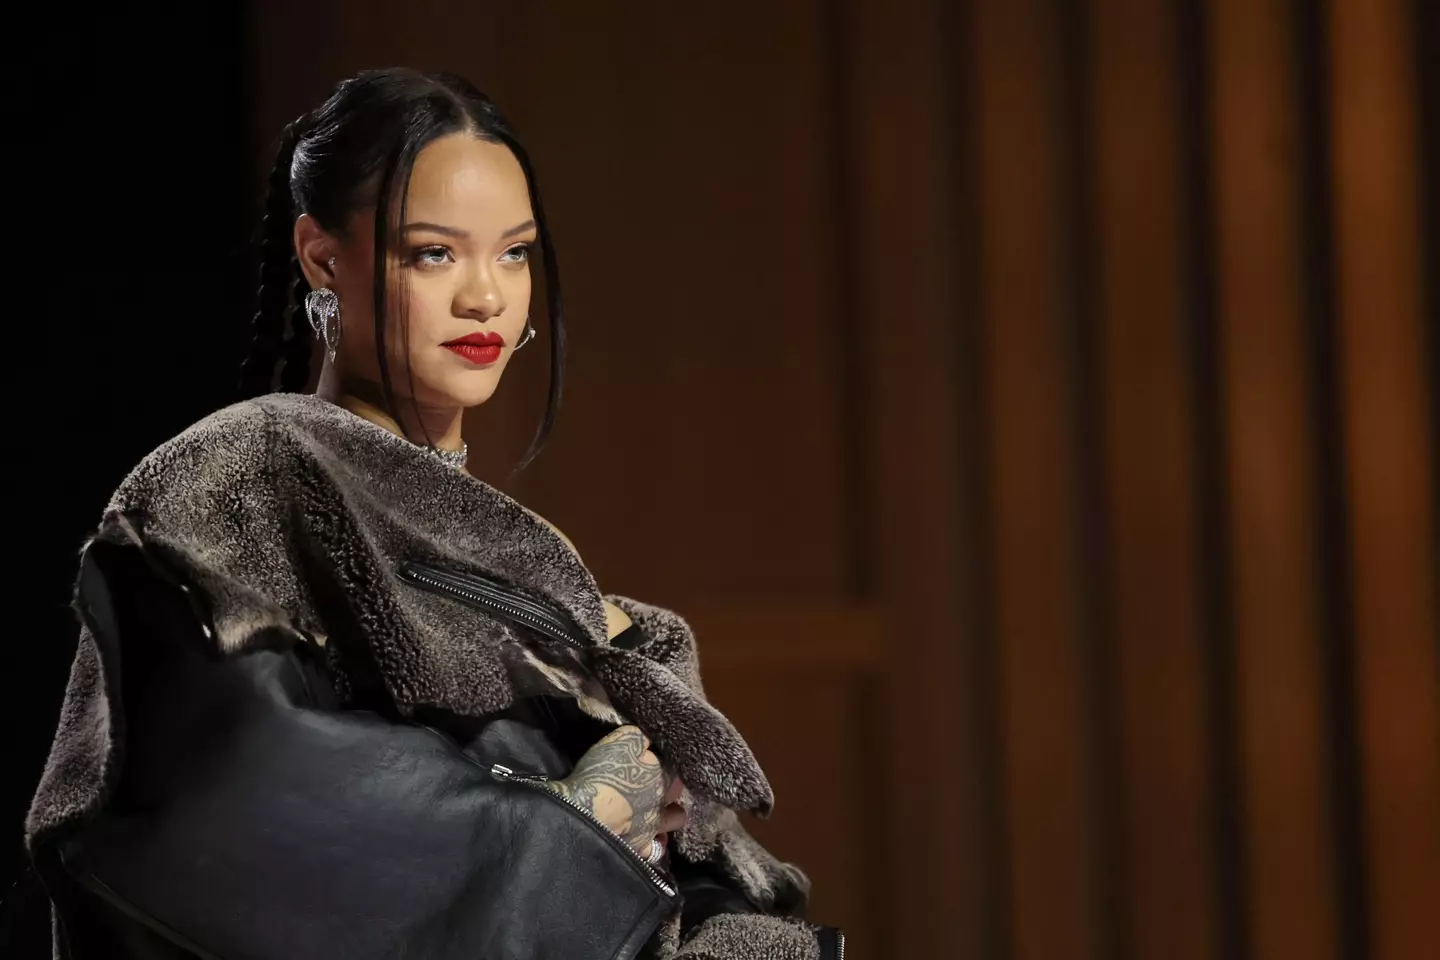 Rihanna's brand, Fenty Beauty, has also praised Ortega.